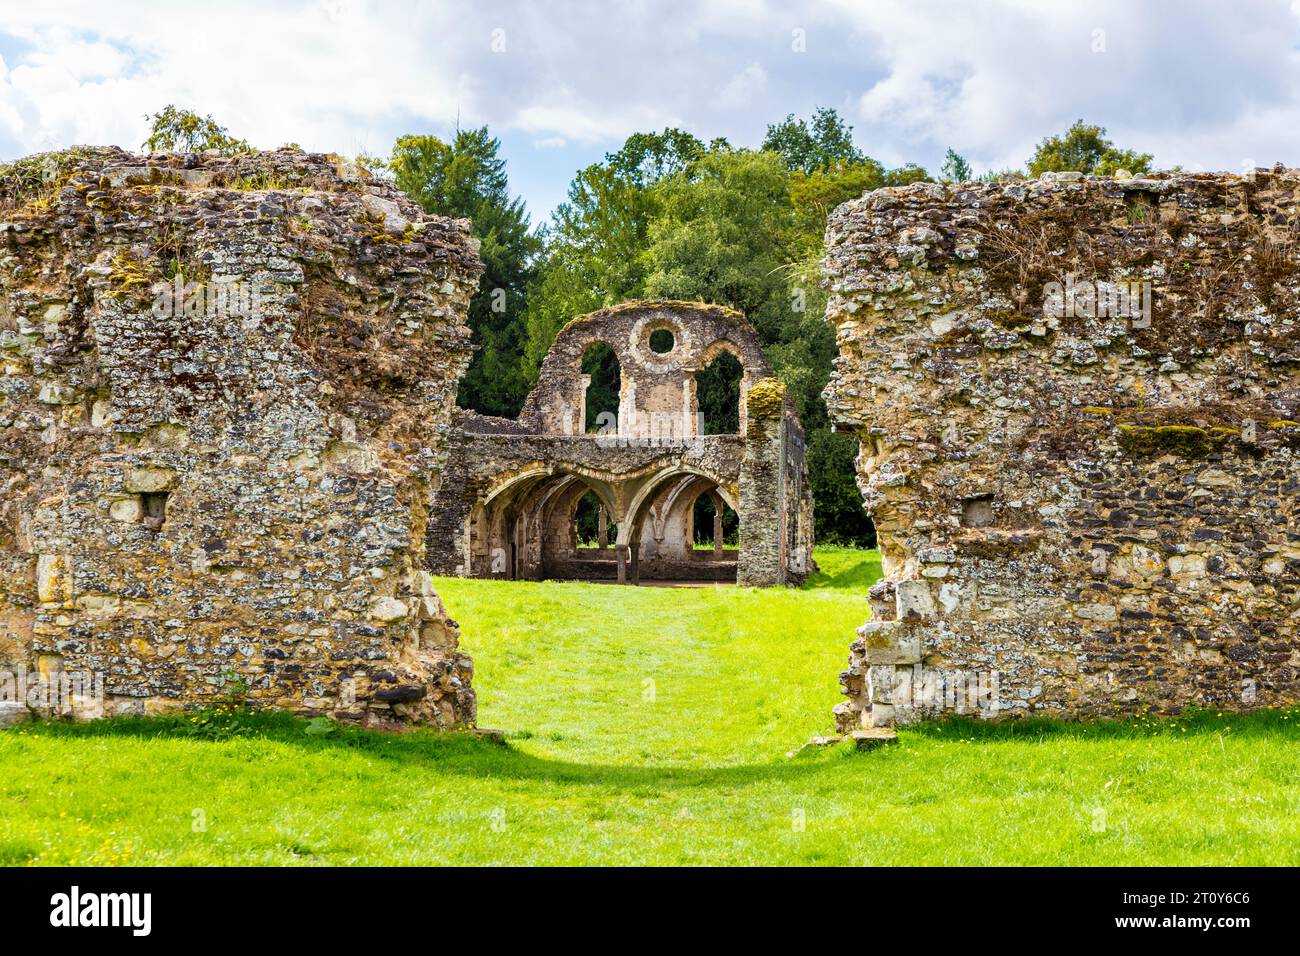 Ruins of Waverley Abbey, a medieval 12th century Cistercian abbey near Farnham, Surrey, England Stock Photo